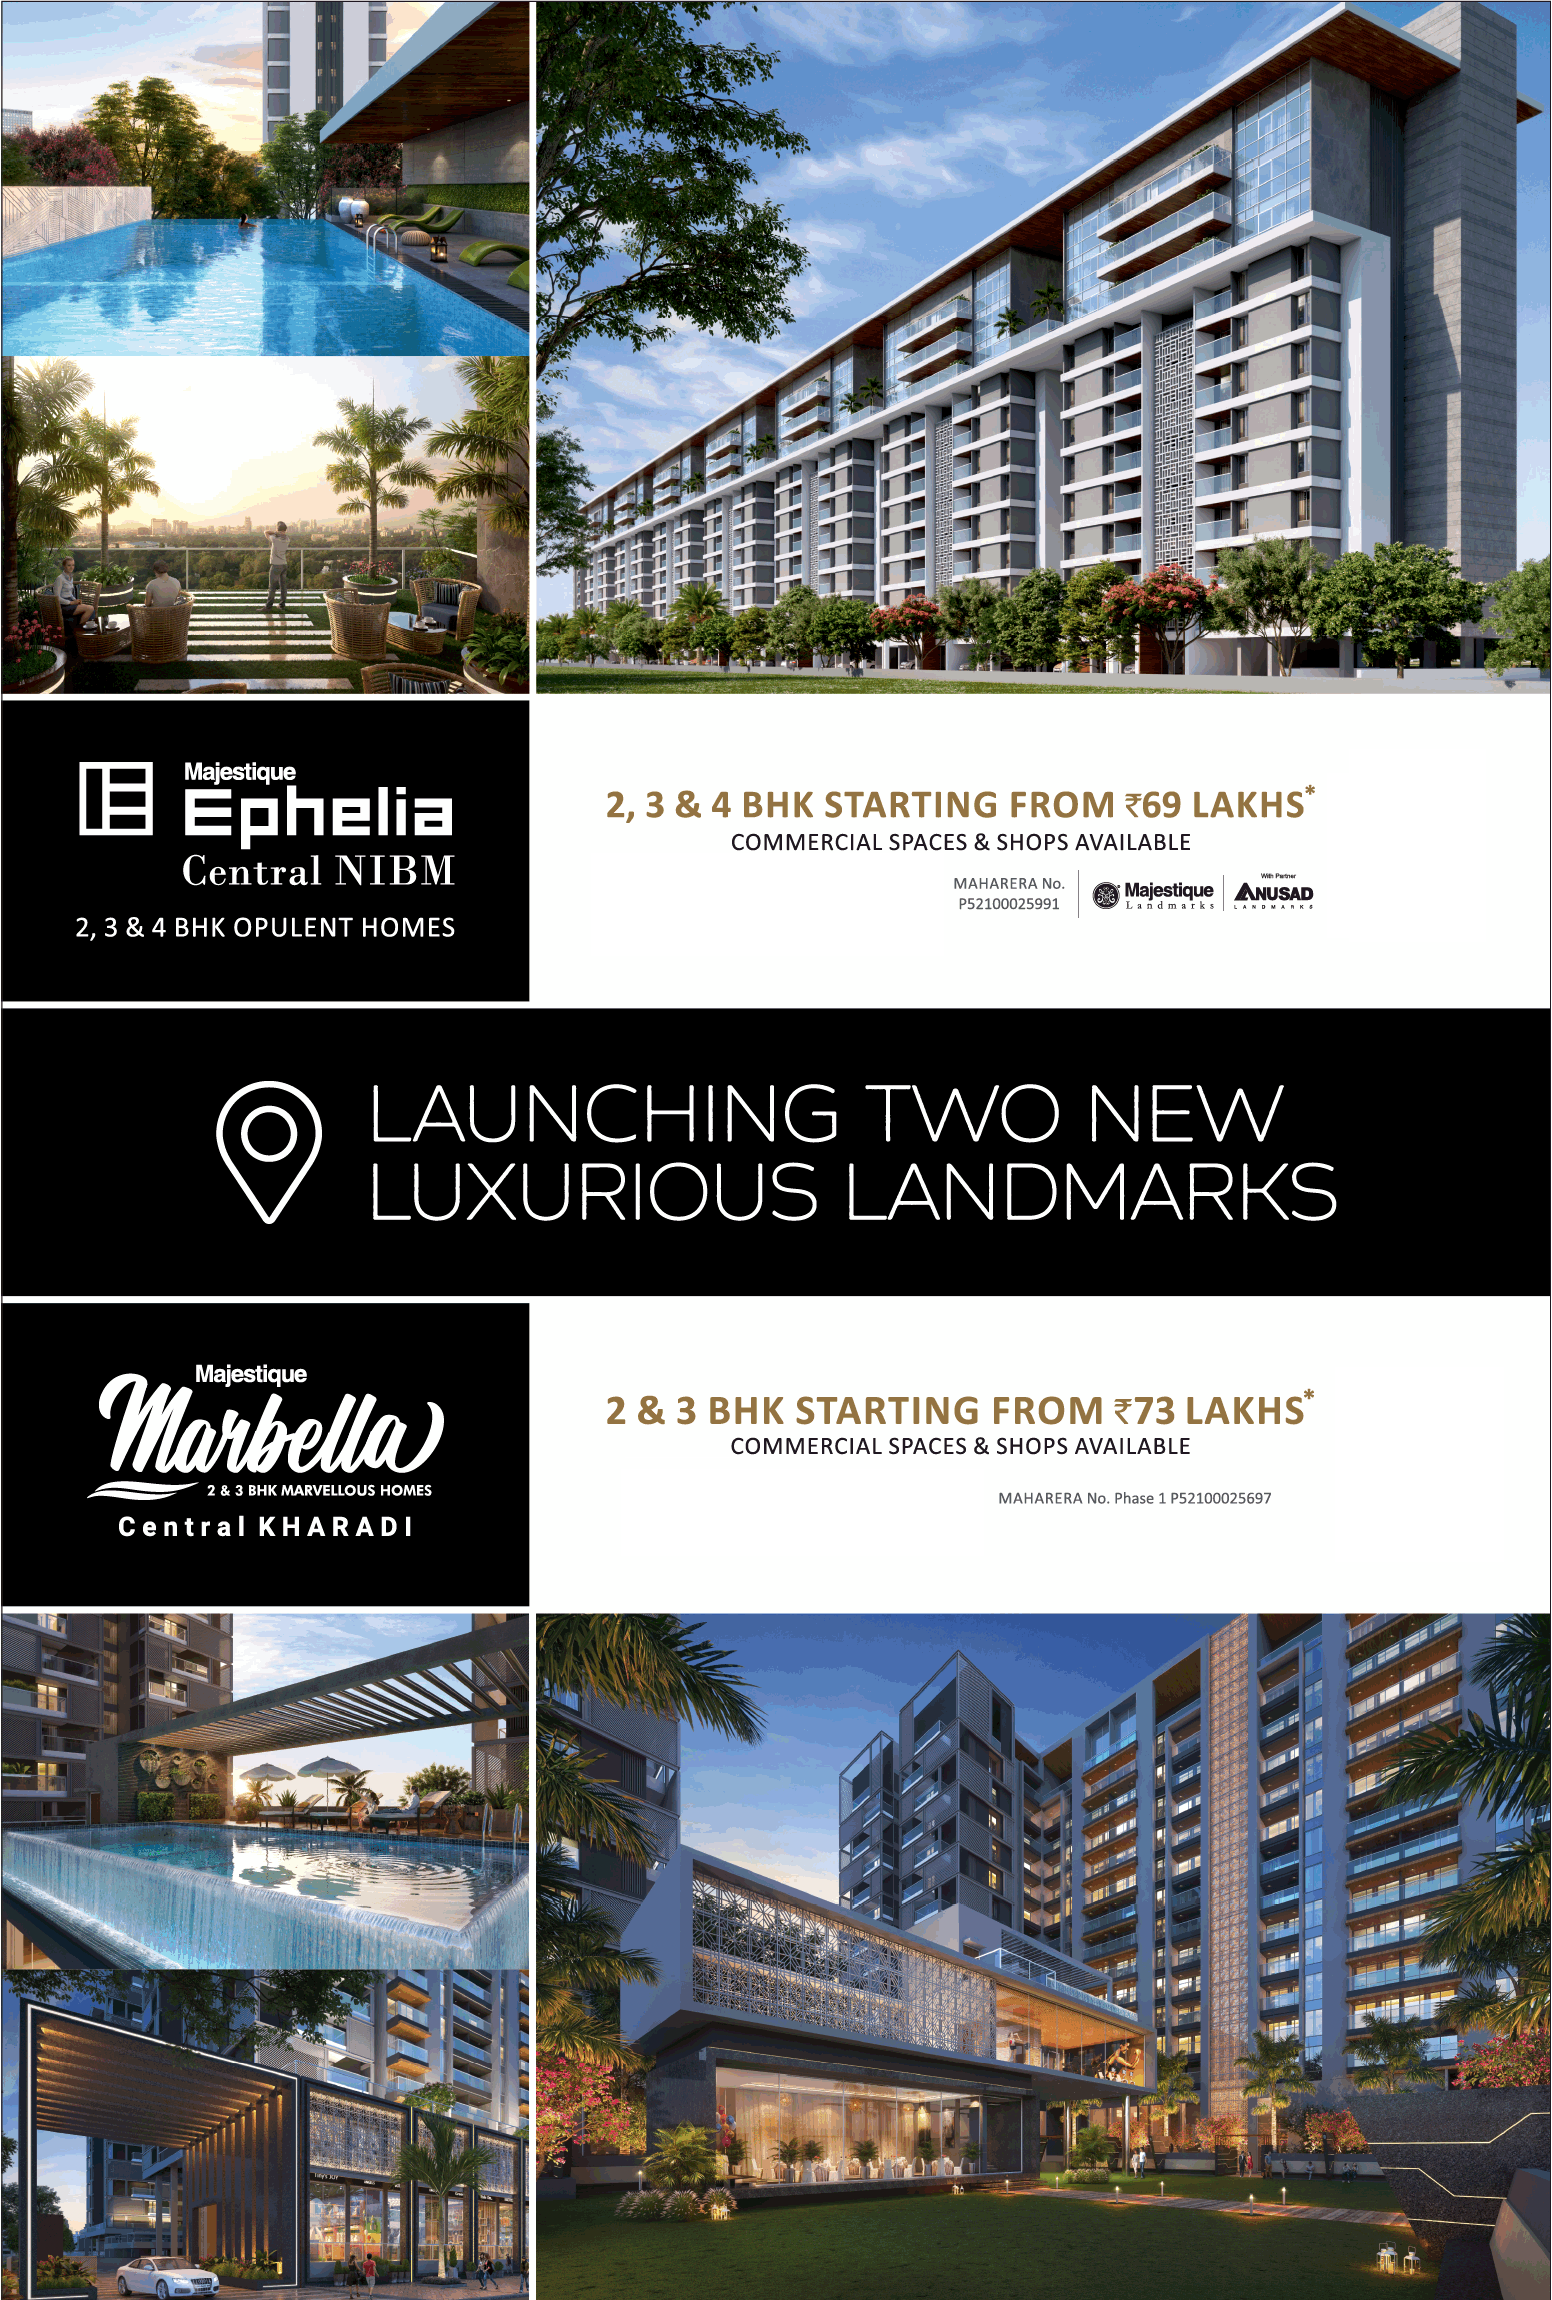 Launching two new luxurious landmarks Majestique Ephelia and Majestique Marbella in Pune